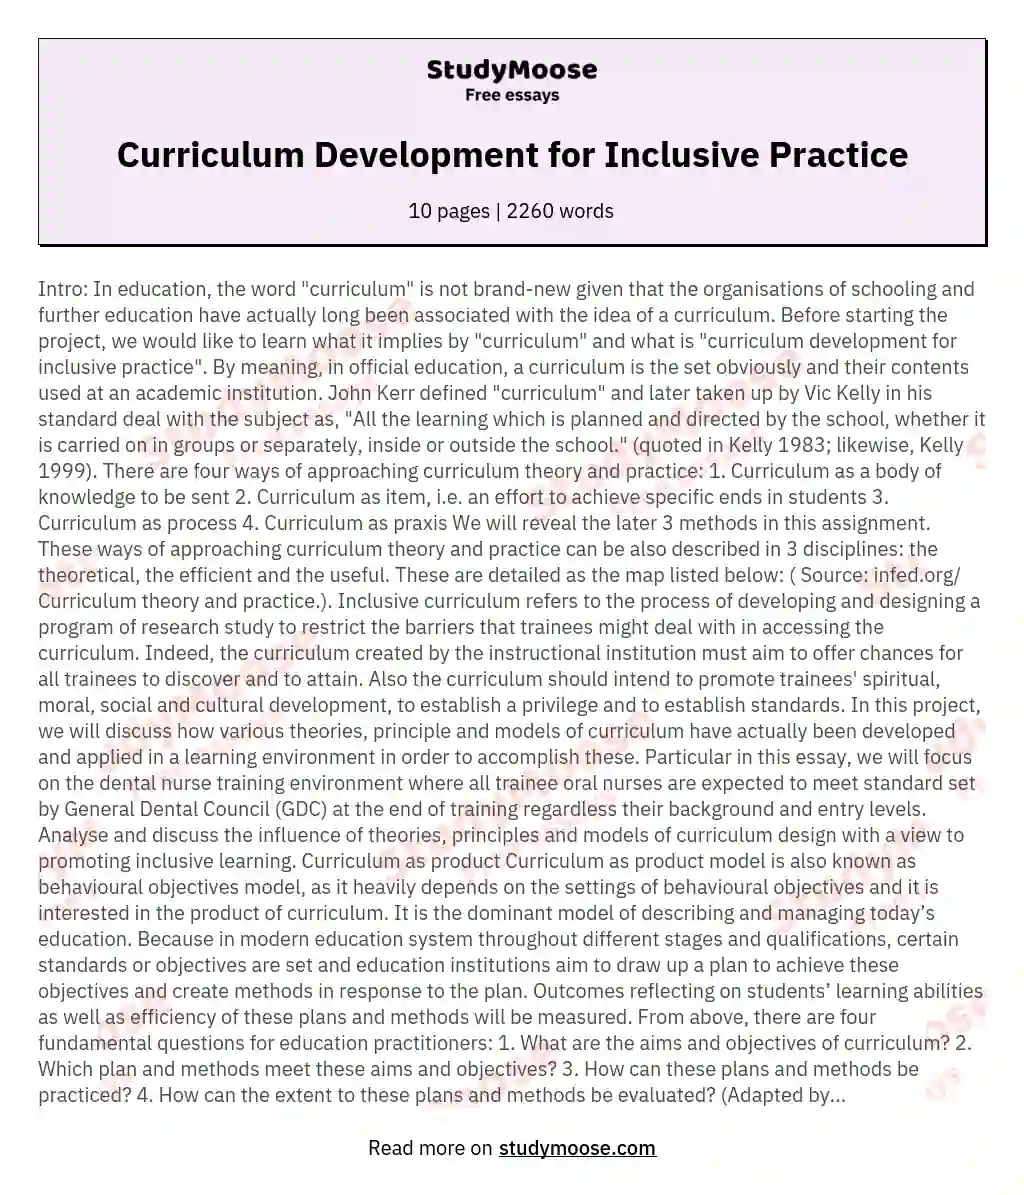 Curriculum Development for Inclusive Practice